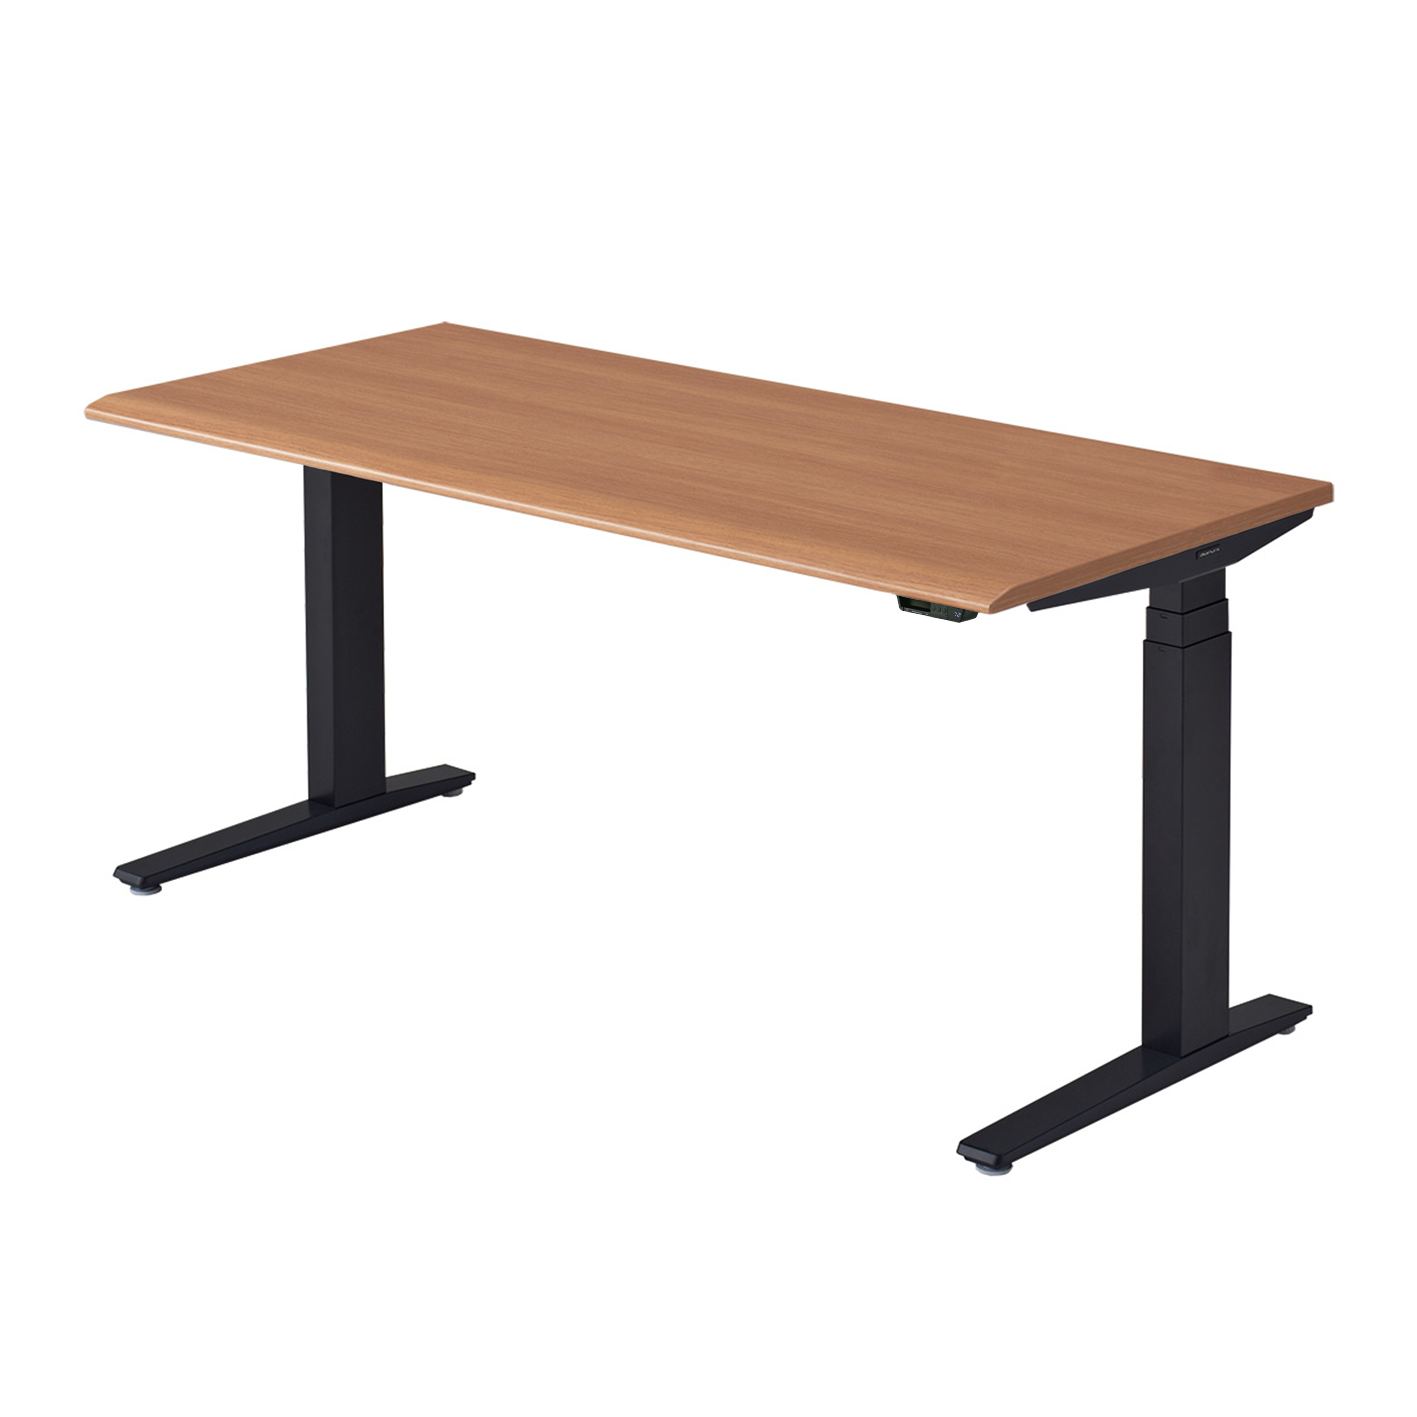 height adjustable table with medium wood tabletop